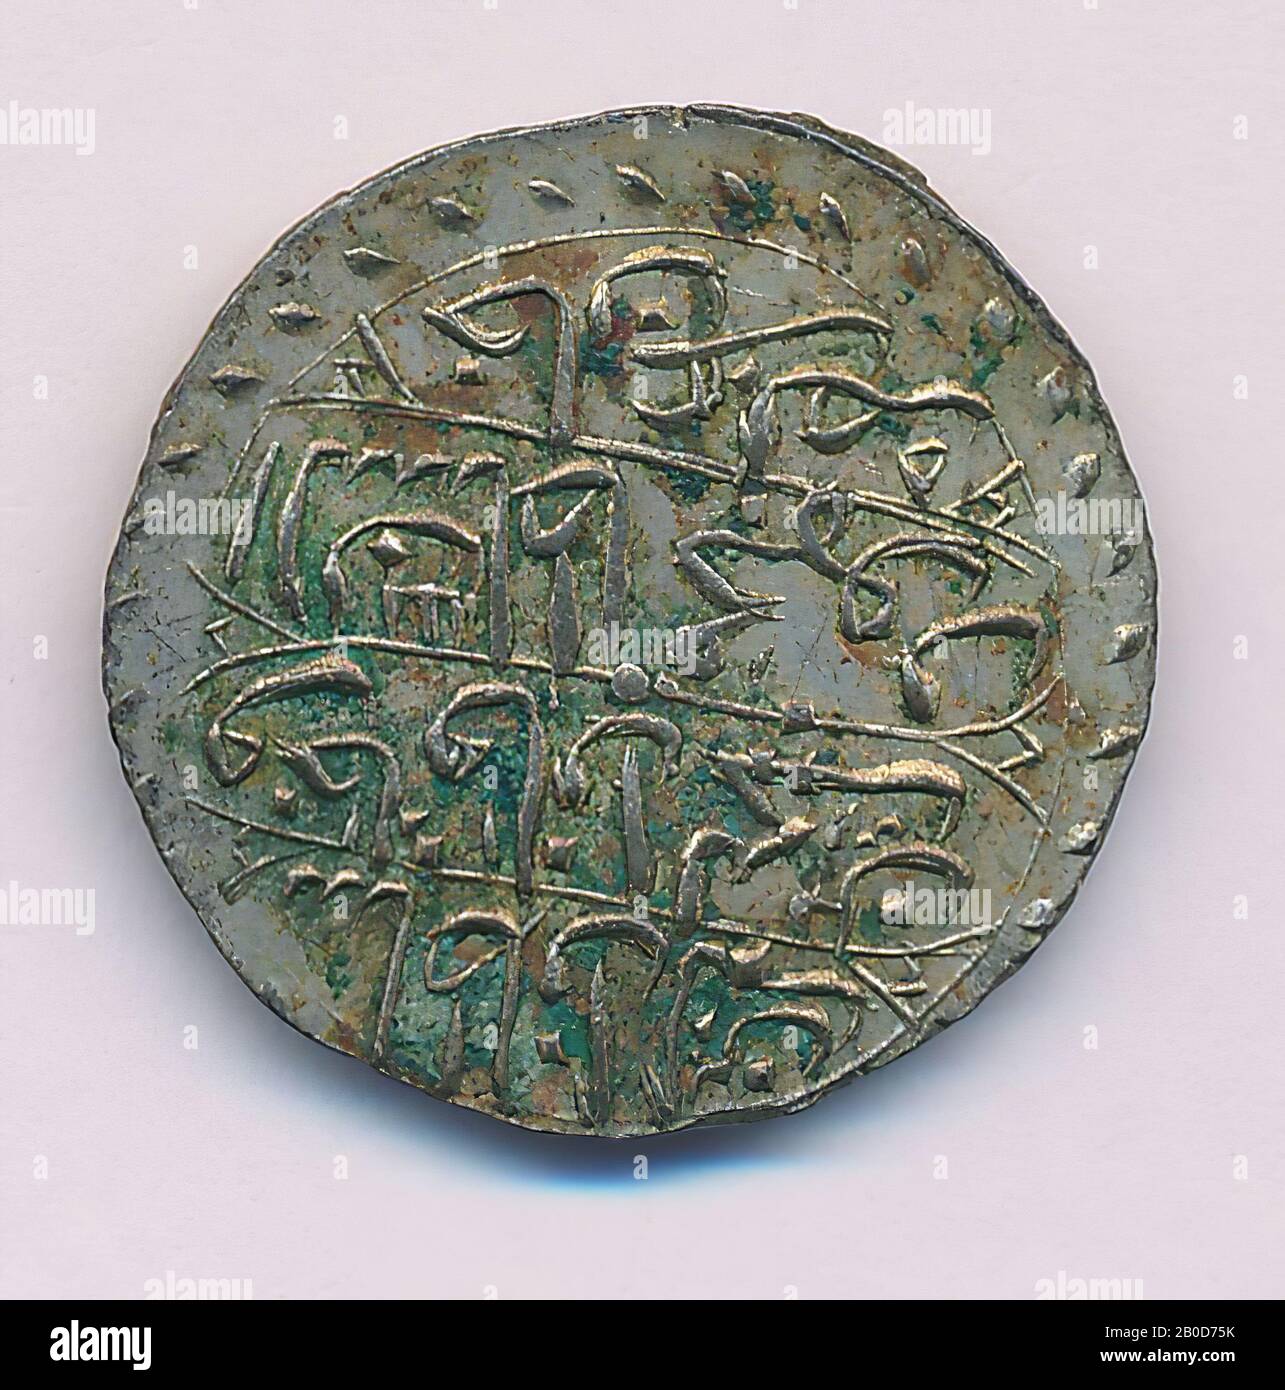 Tunis, piastre, trillion, coin, piaster Tunis, metal, trillion, diam. 2.1 cm, wt. 3.10 grams, 19th century 1800-1900, Tunisia Stock Photo